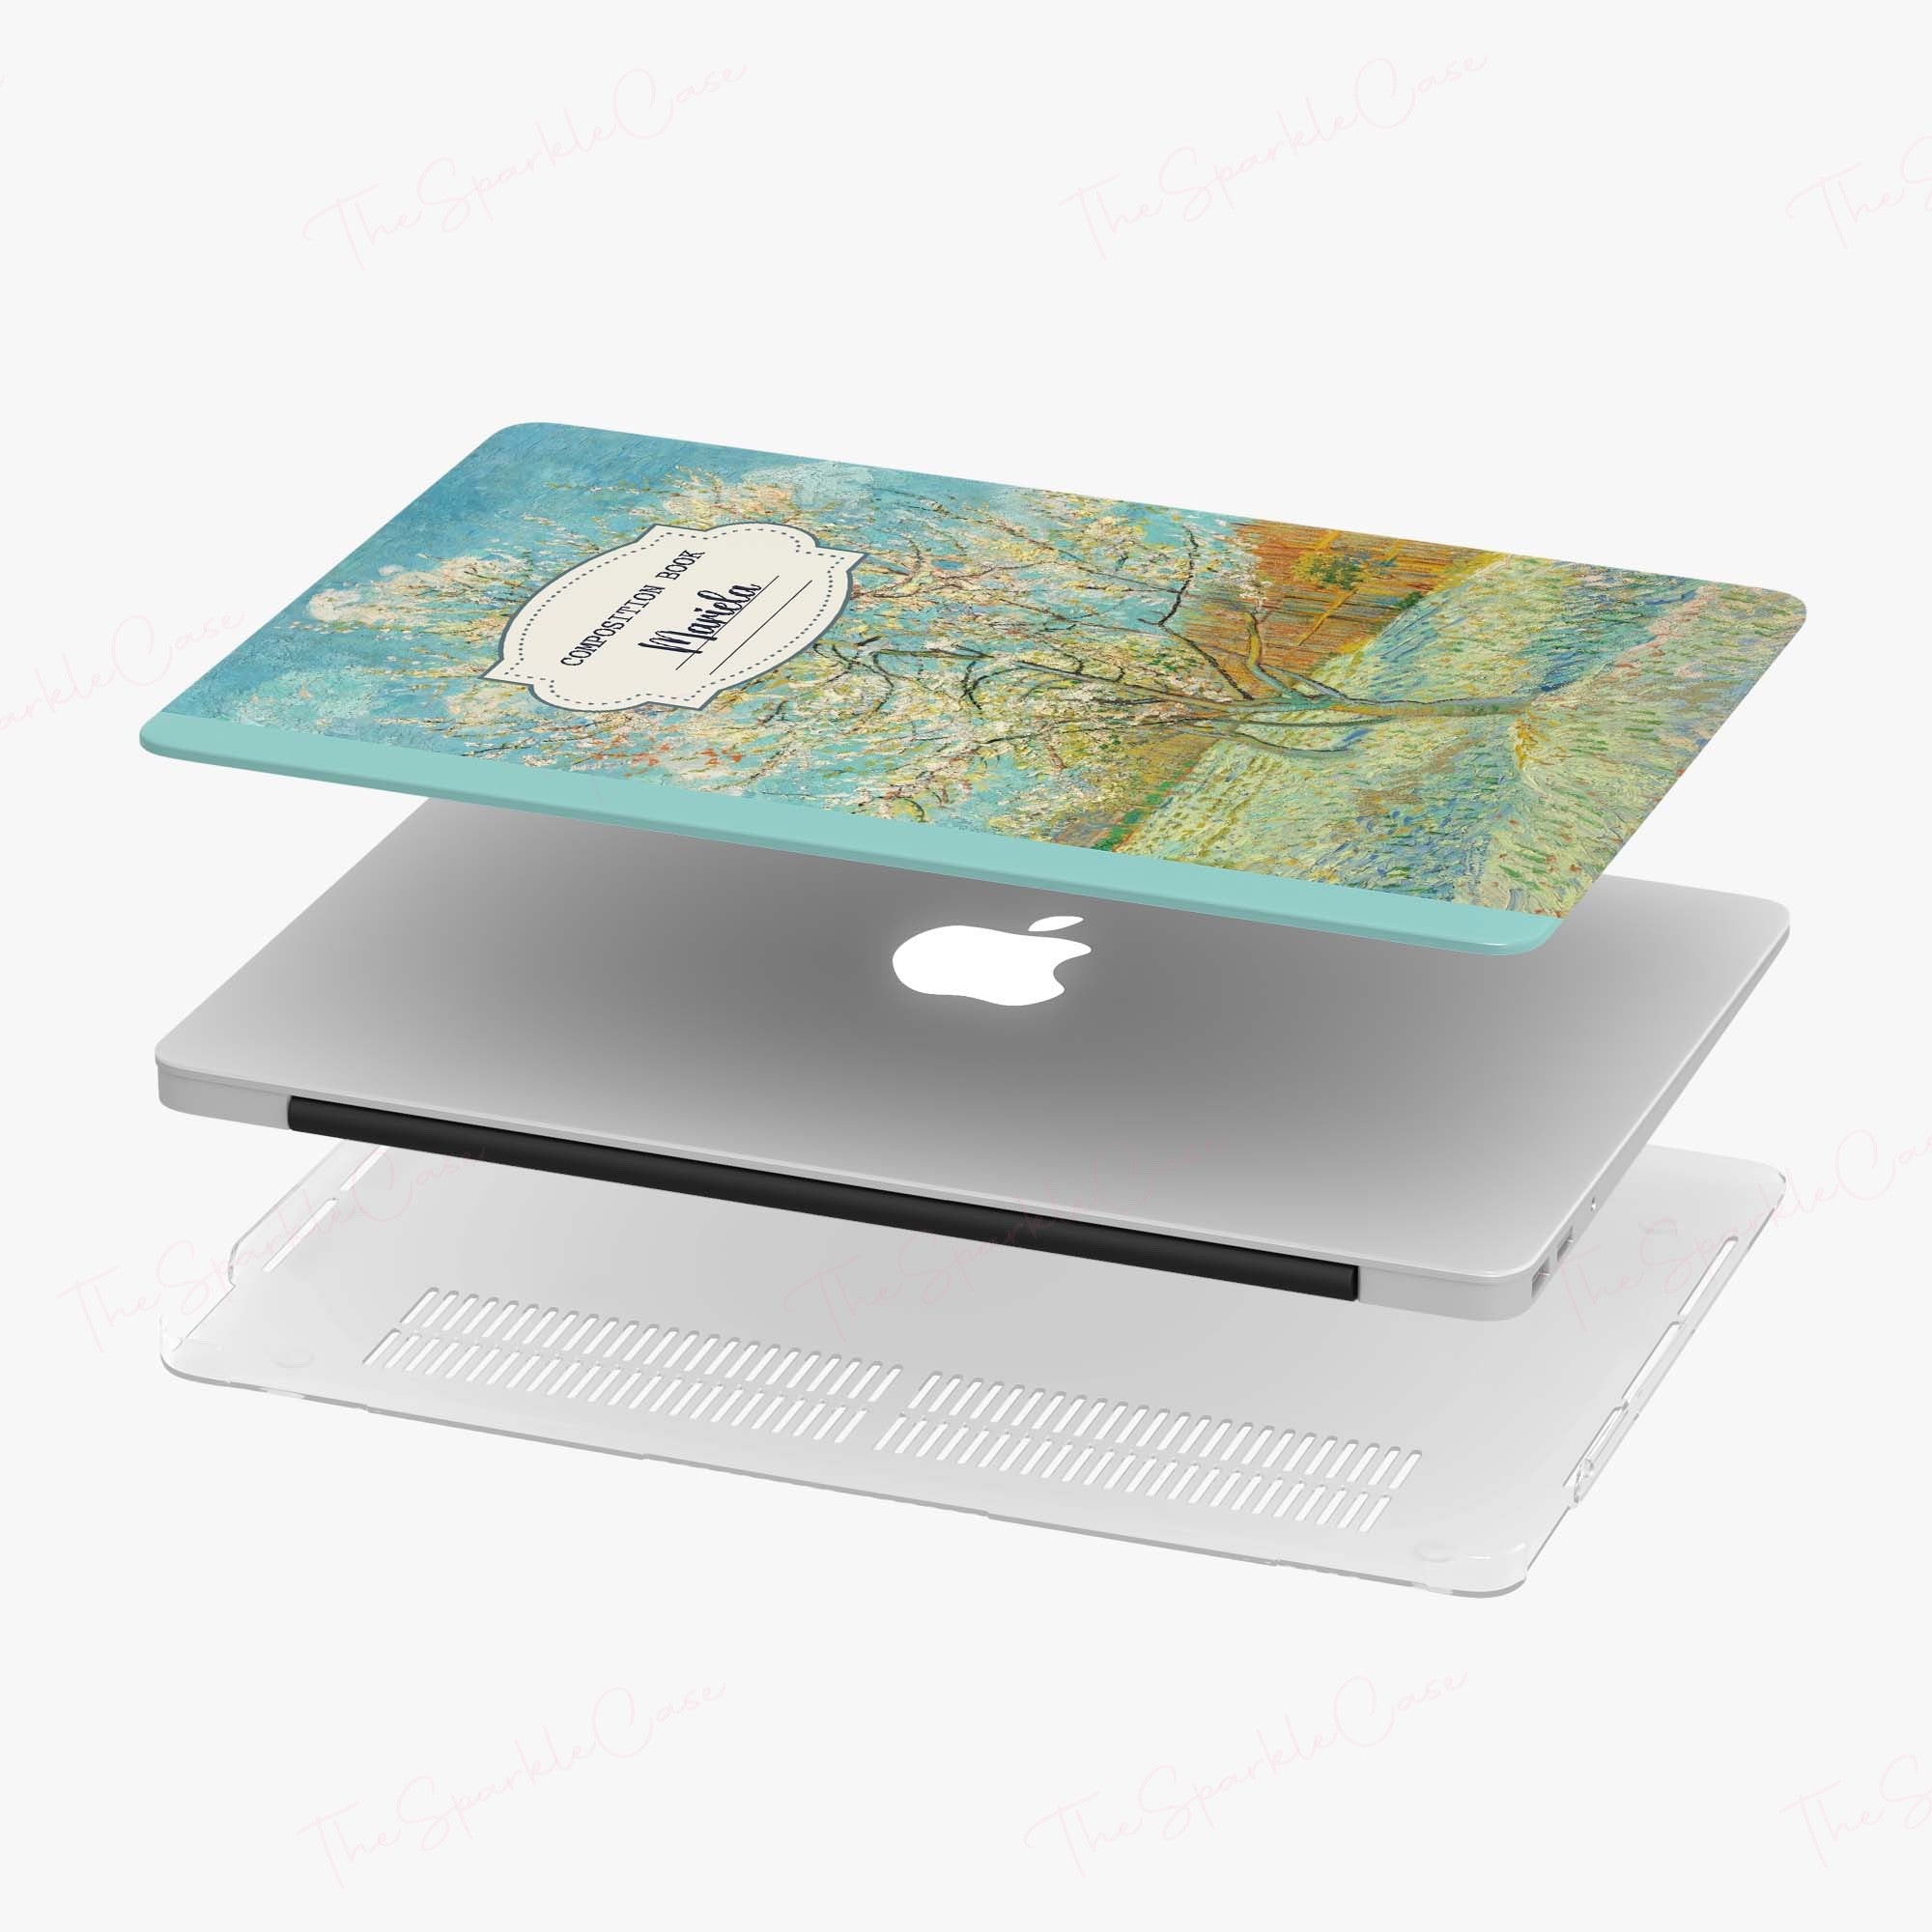 Custom Name Case Composition Book Van Gogh Aesthetic MacBook Case The Pink Peach Tree